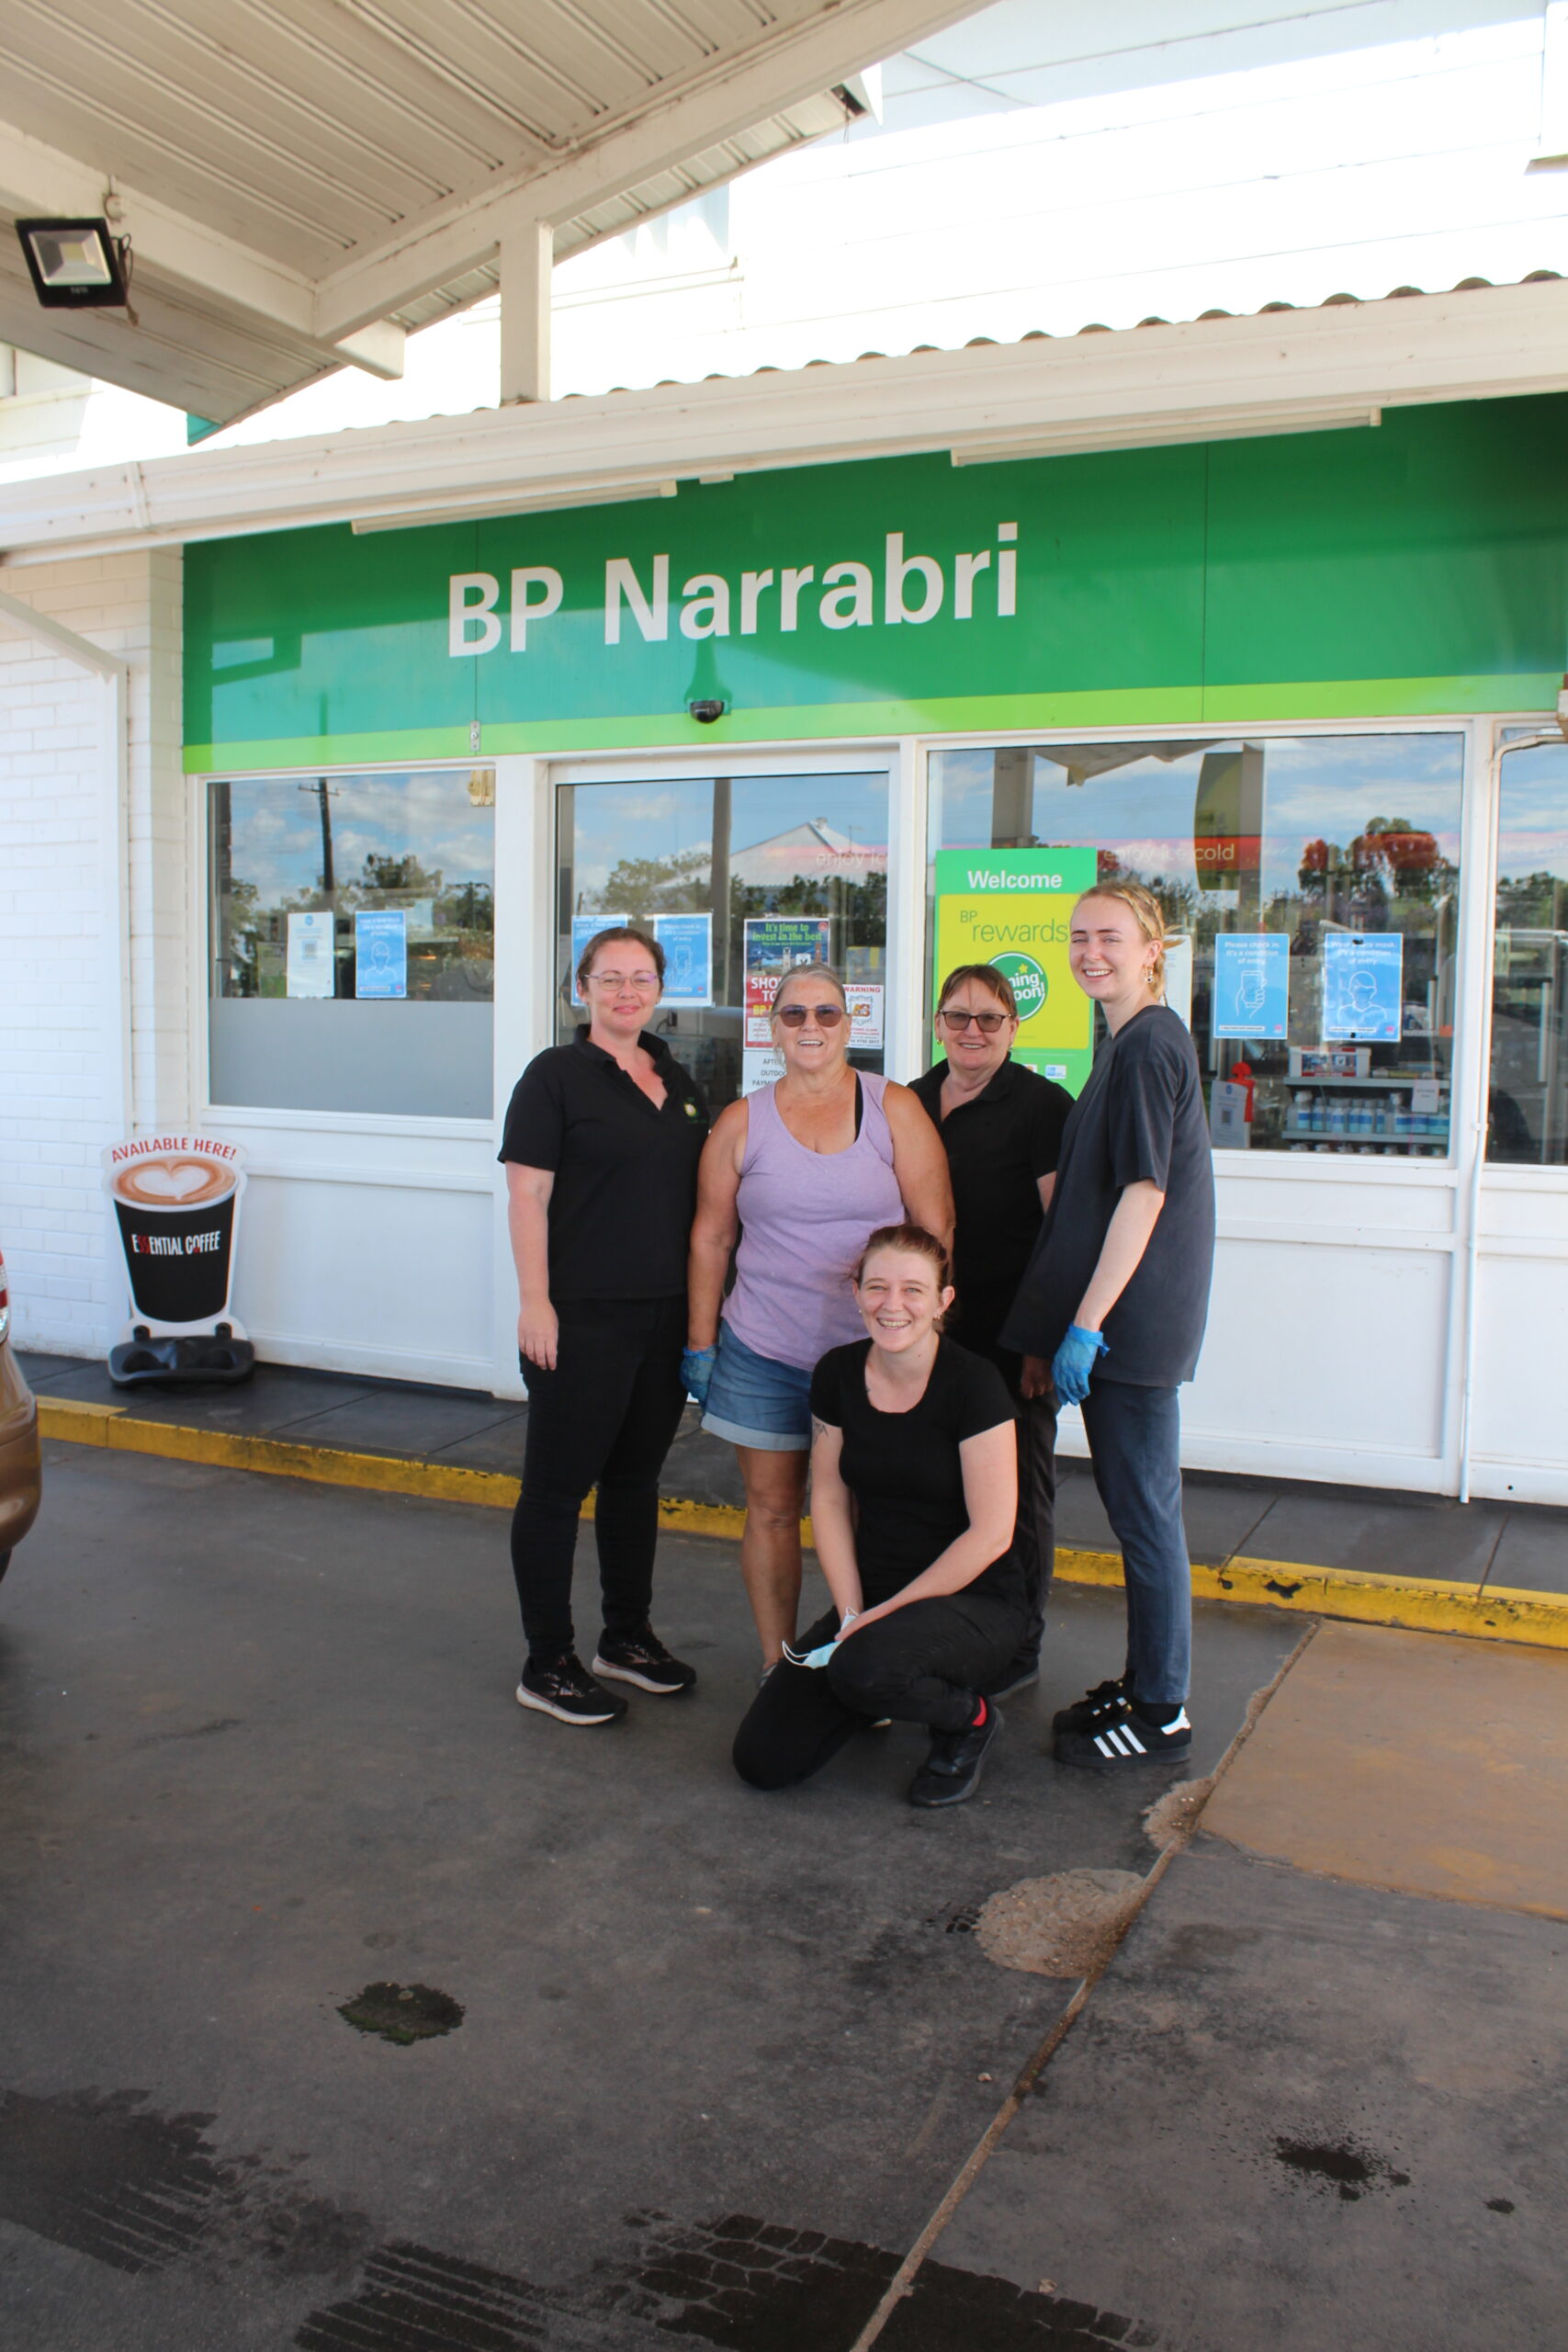 Fill the tank with BP Narrabri